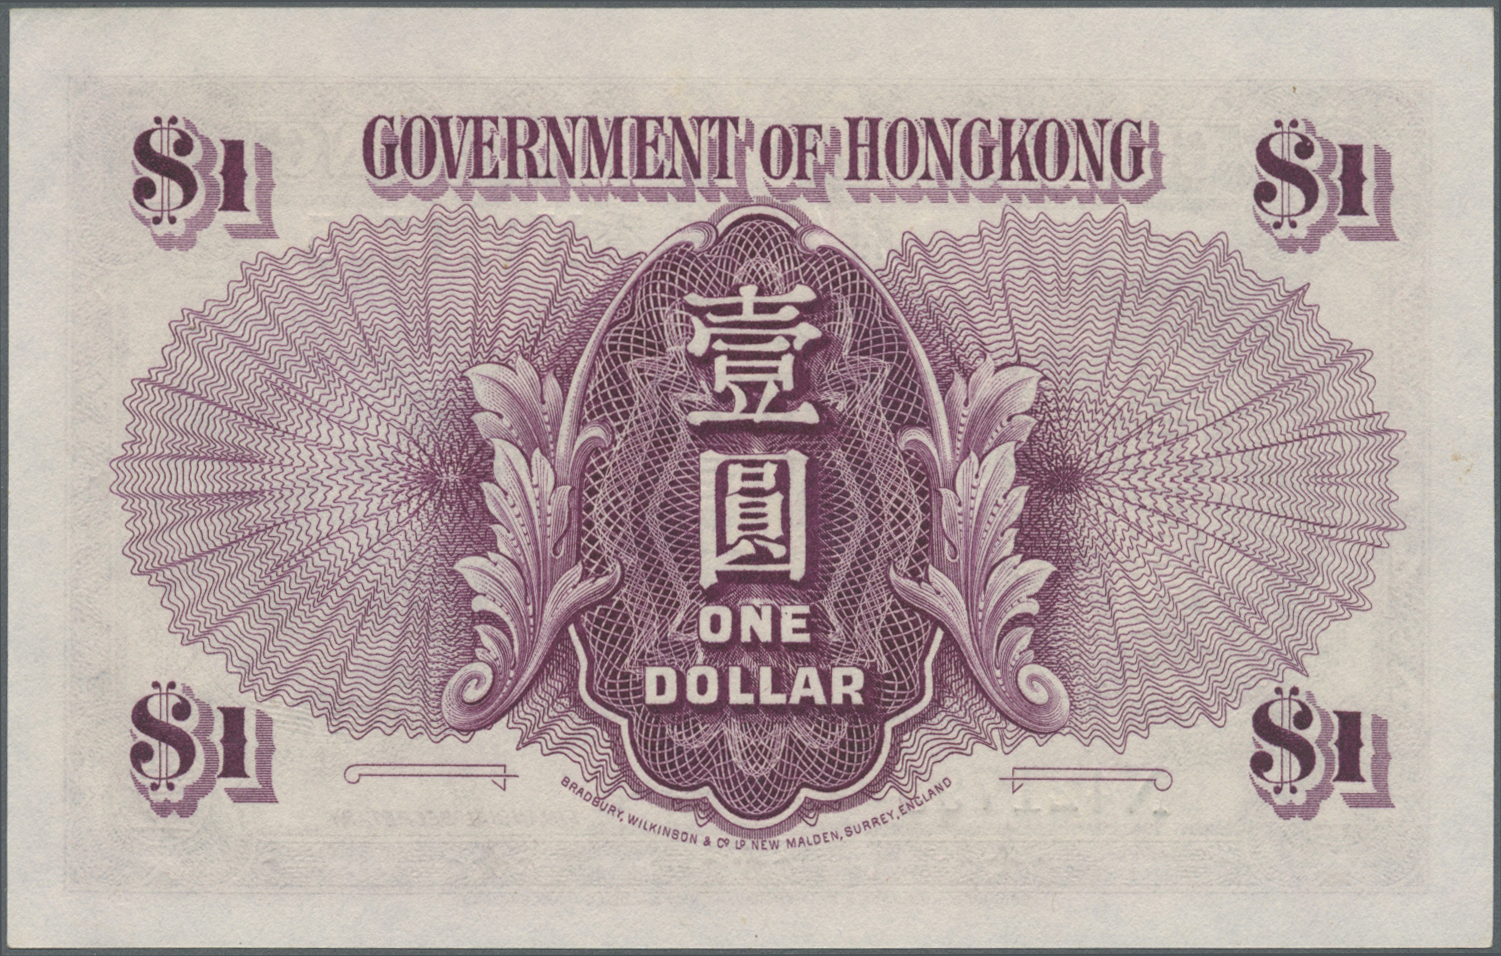 01001 Hong Kong: 1 Dollar ND P. 312, In Rarely Seen Condition, Never Folded, No Holes Or Tear, Original Crisp, Only A Li - Hong Kong